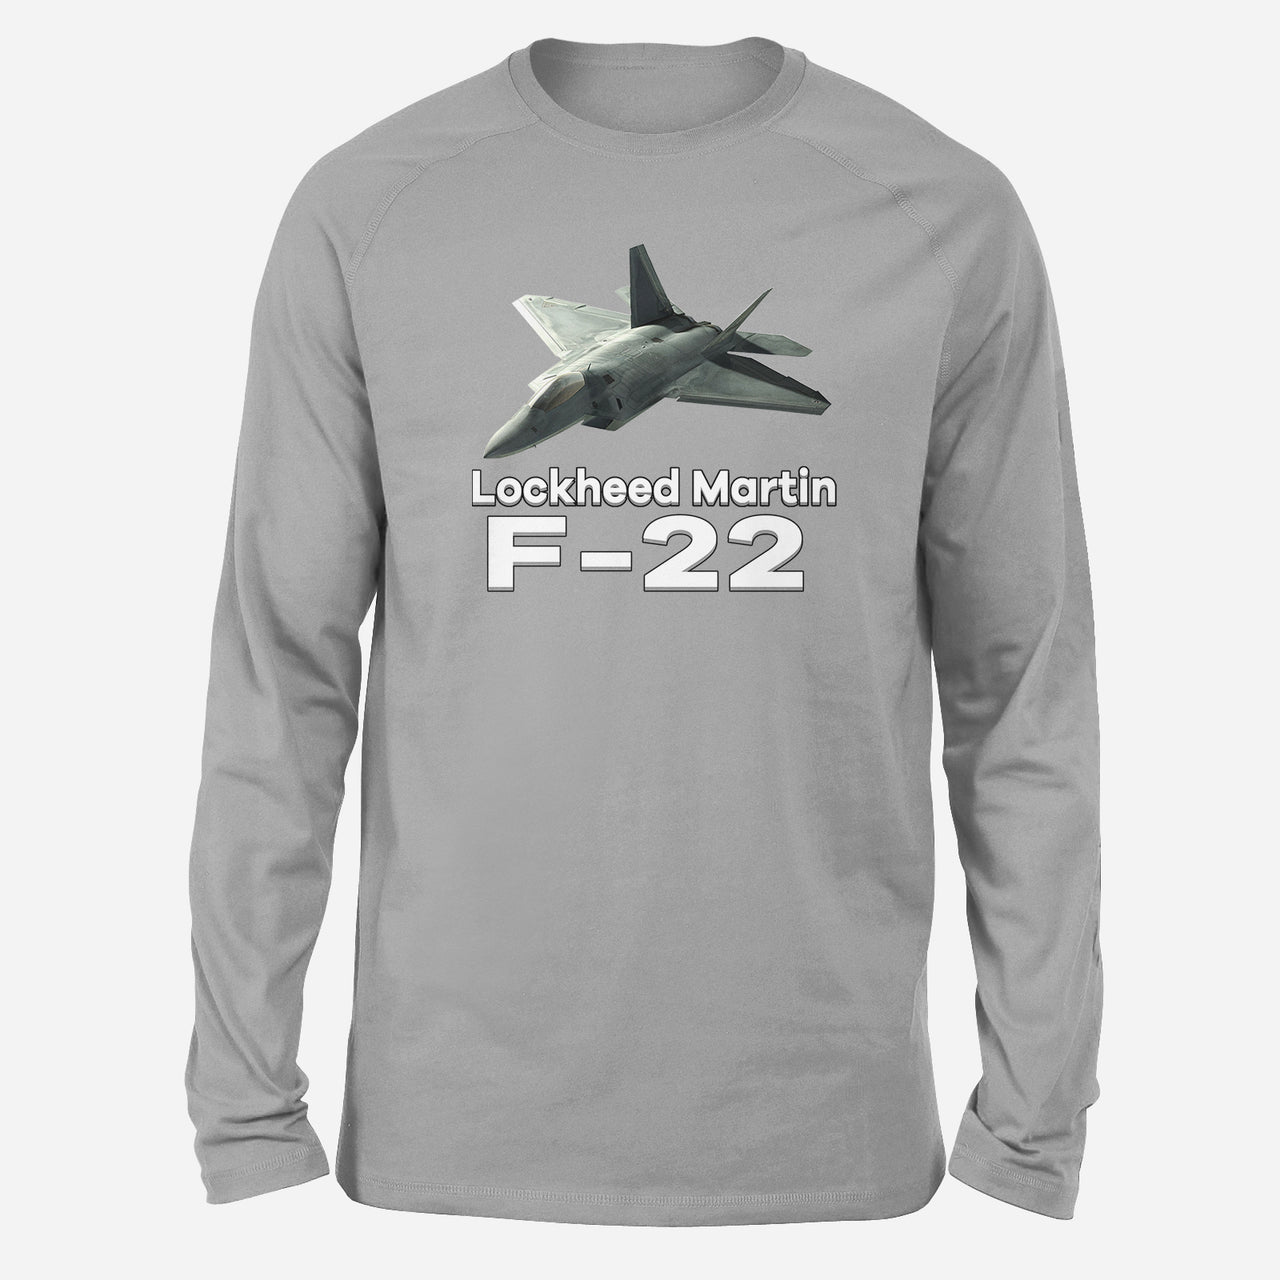 The Lockheed Martin F22 Designed Long-Sleeve T-Shirts